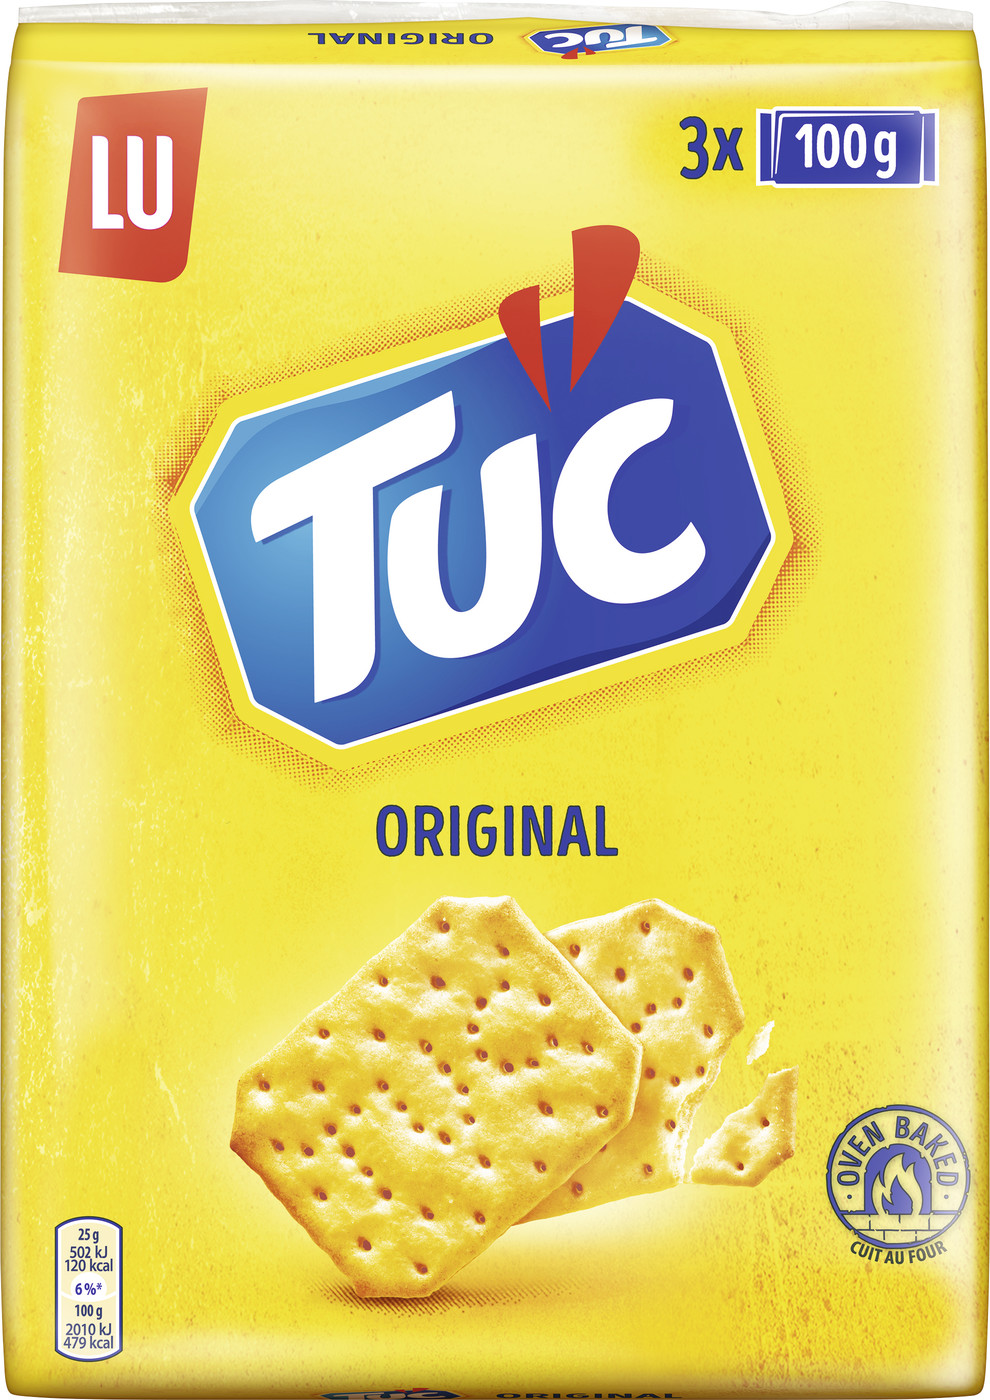 LU Tuc Cracker Original 3x 100G